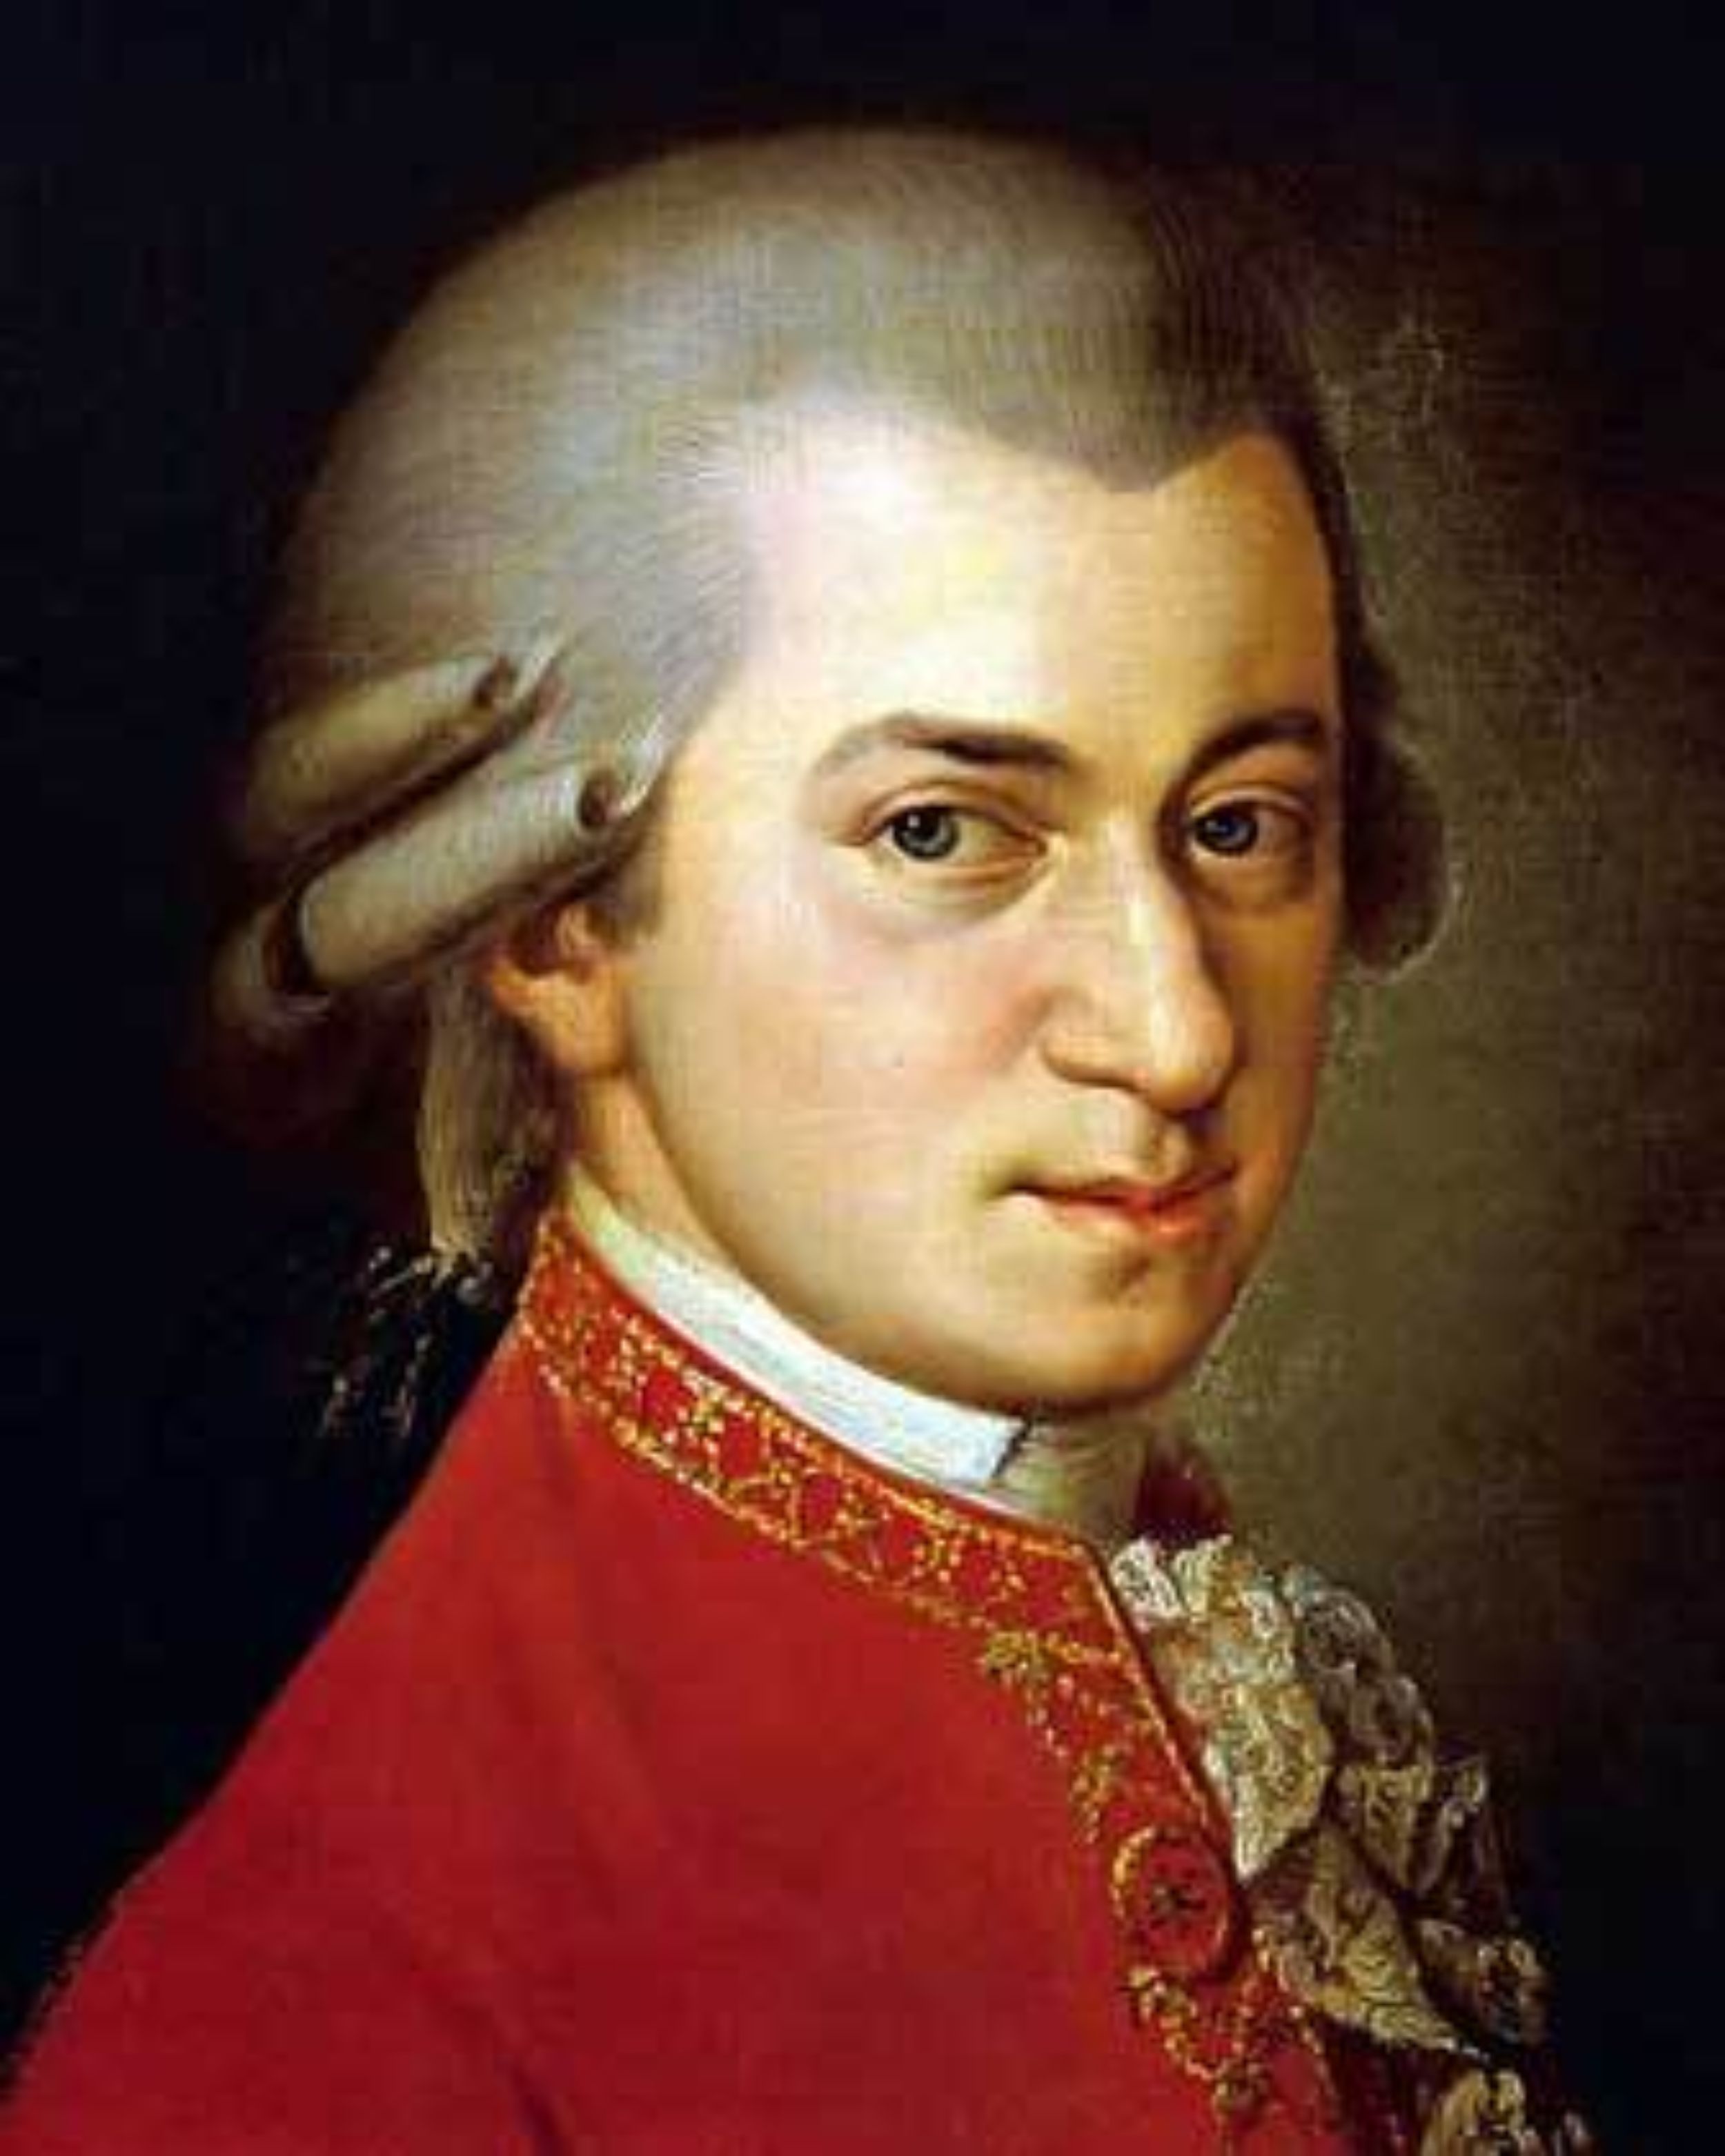  Biografía de W. A. Mozart  (1756-1791)